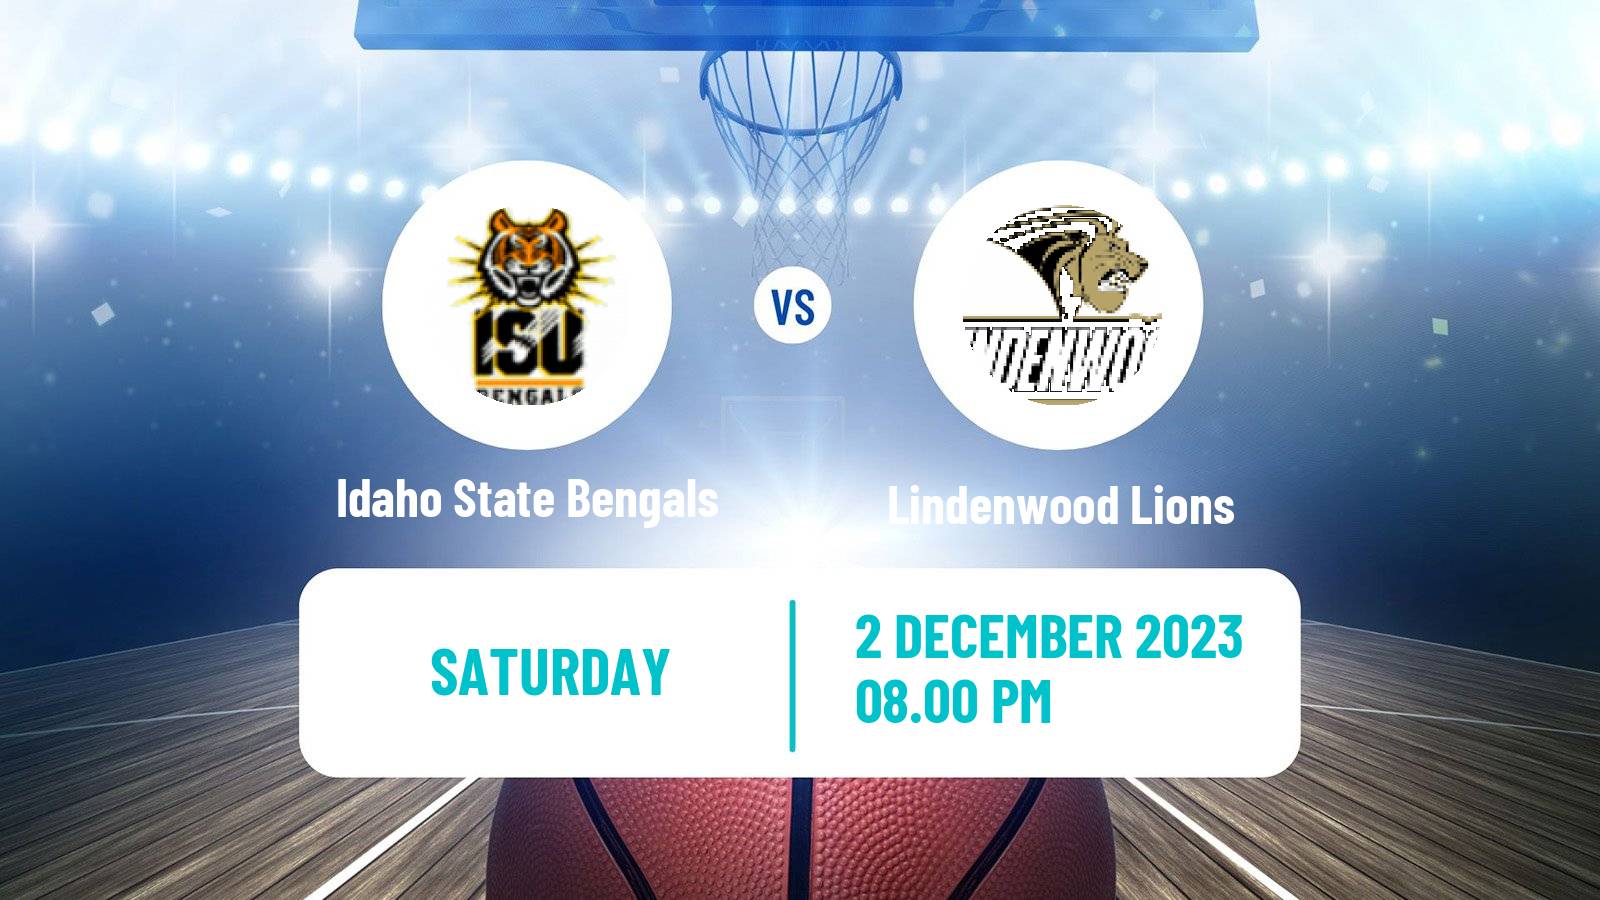 Basketball NCAA College Basketball Idaho State Bengals - Lindenwood Lions